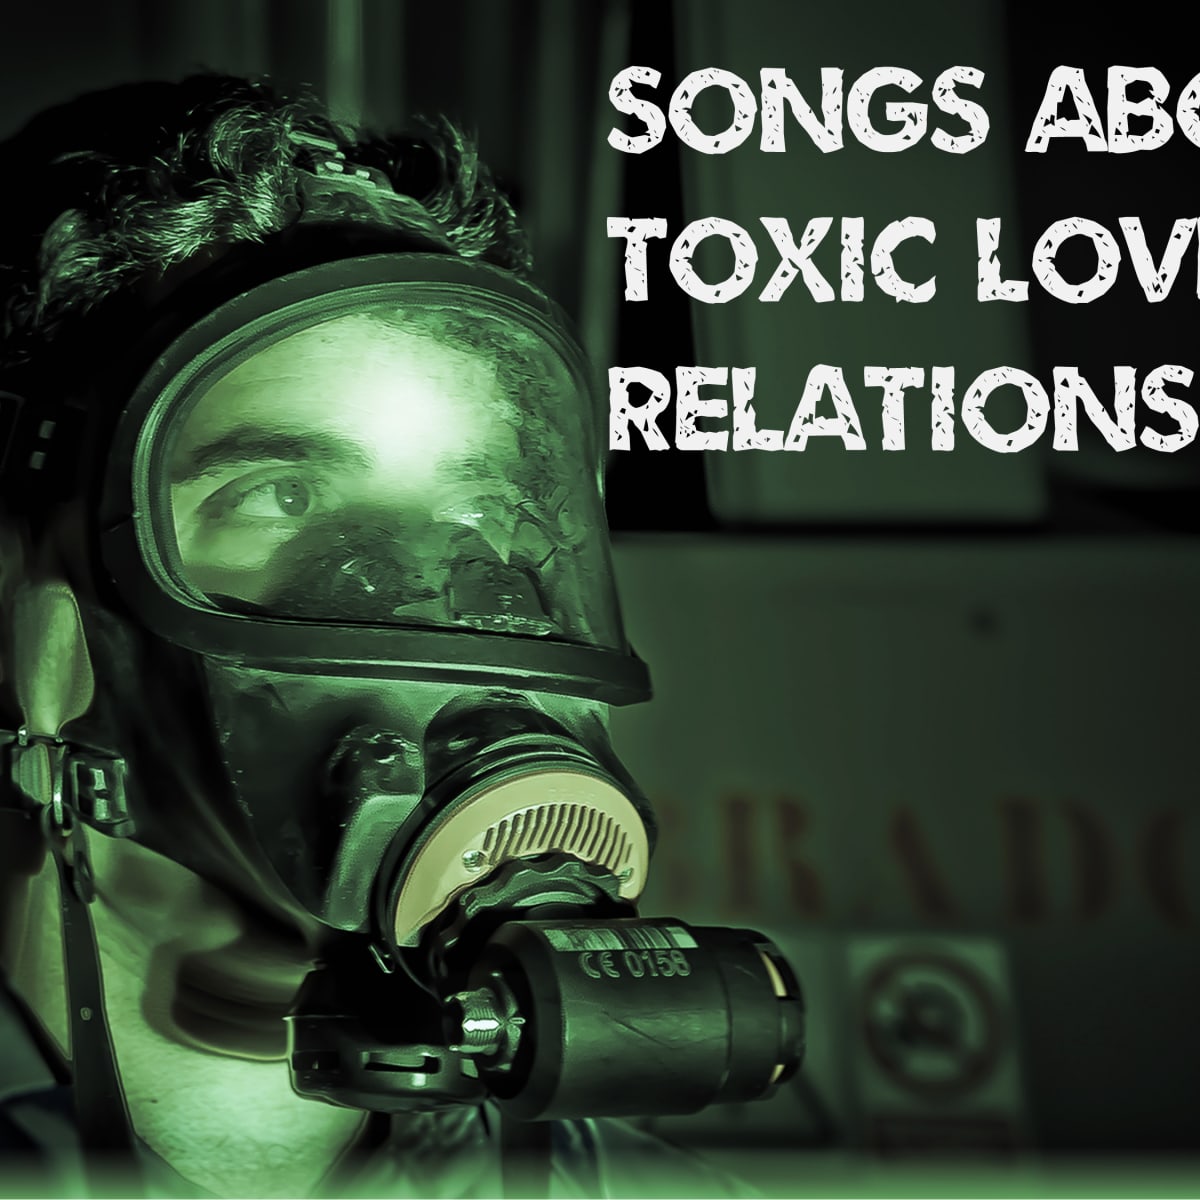 Hurt песня toxic. Toxic Love. Toxic relationship. Токсичная любовь. Токсик песня.